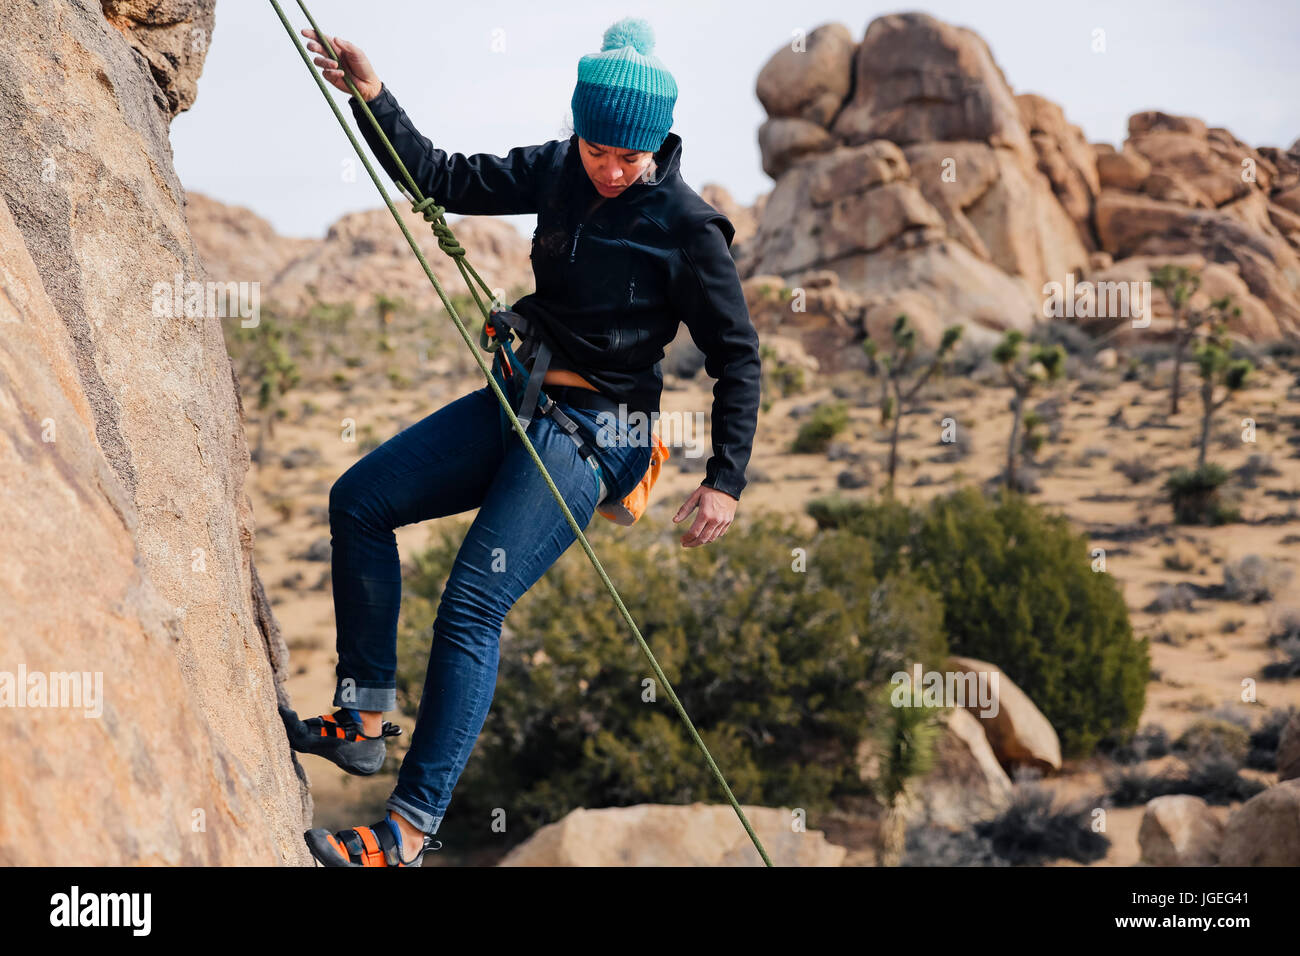 Junge Mischlinge Frau gekleidet für kaltes Wetter Felsen klettert in der Wüste Stockfoto